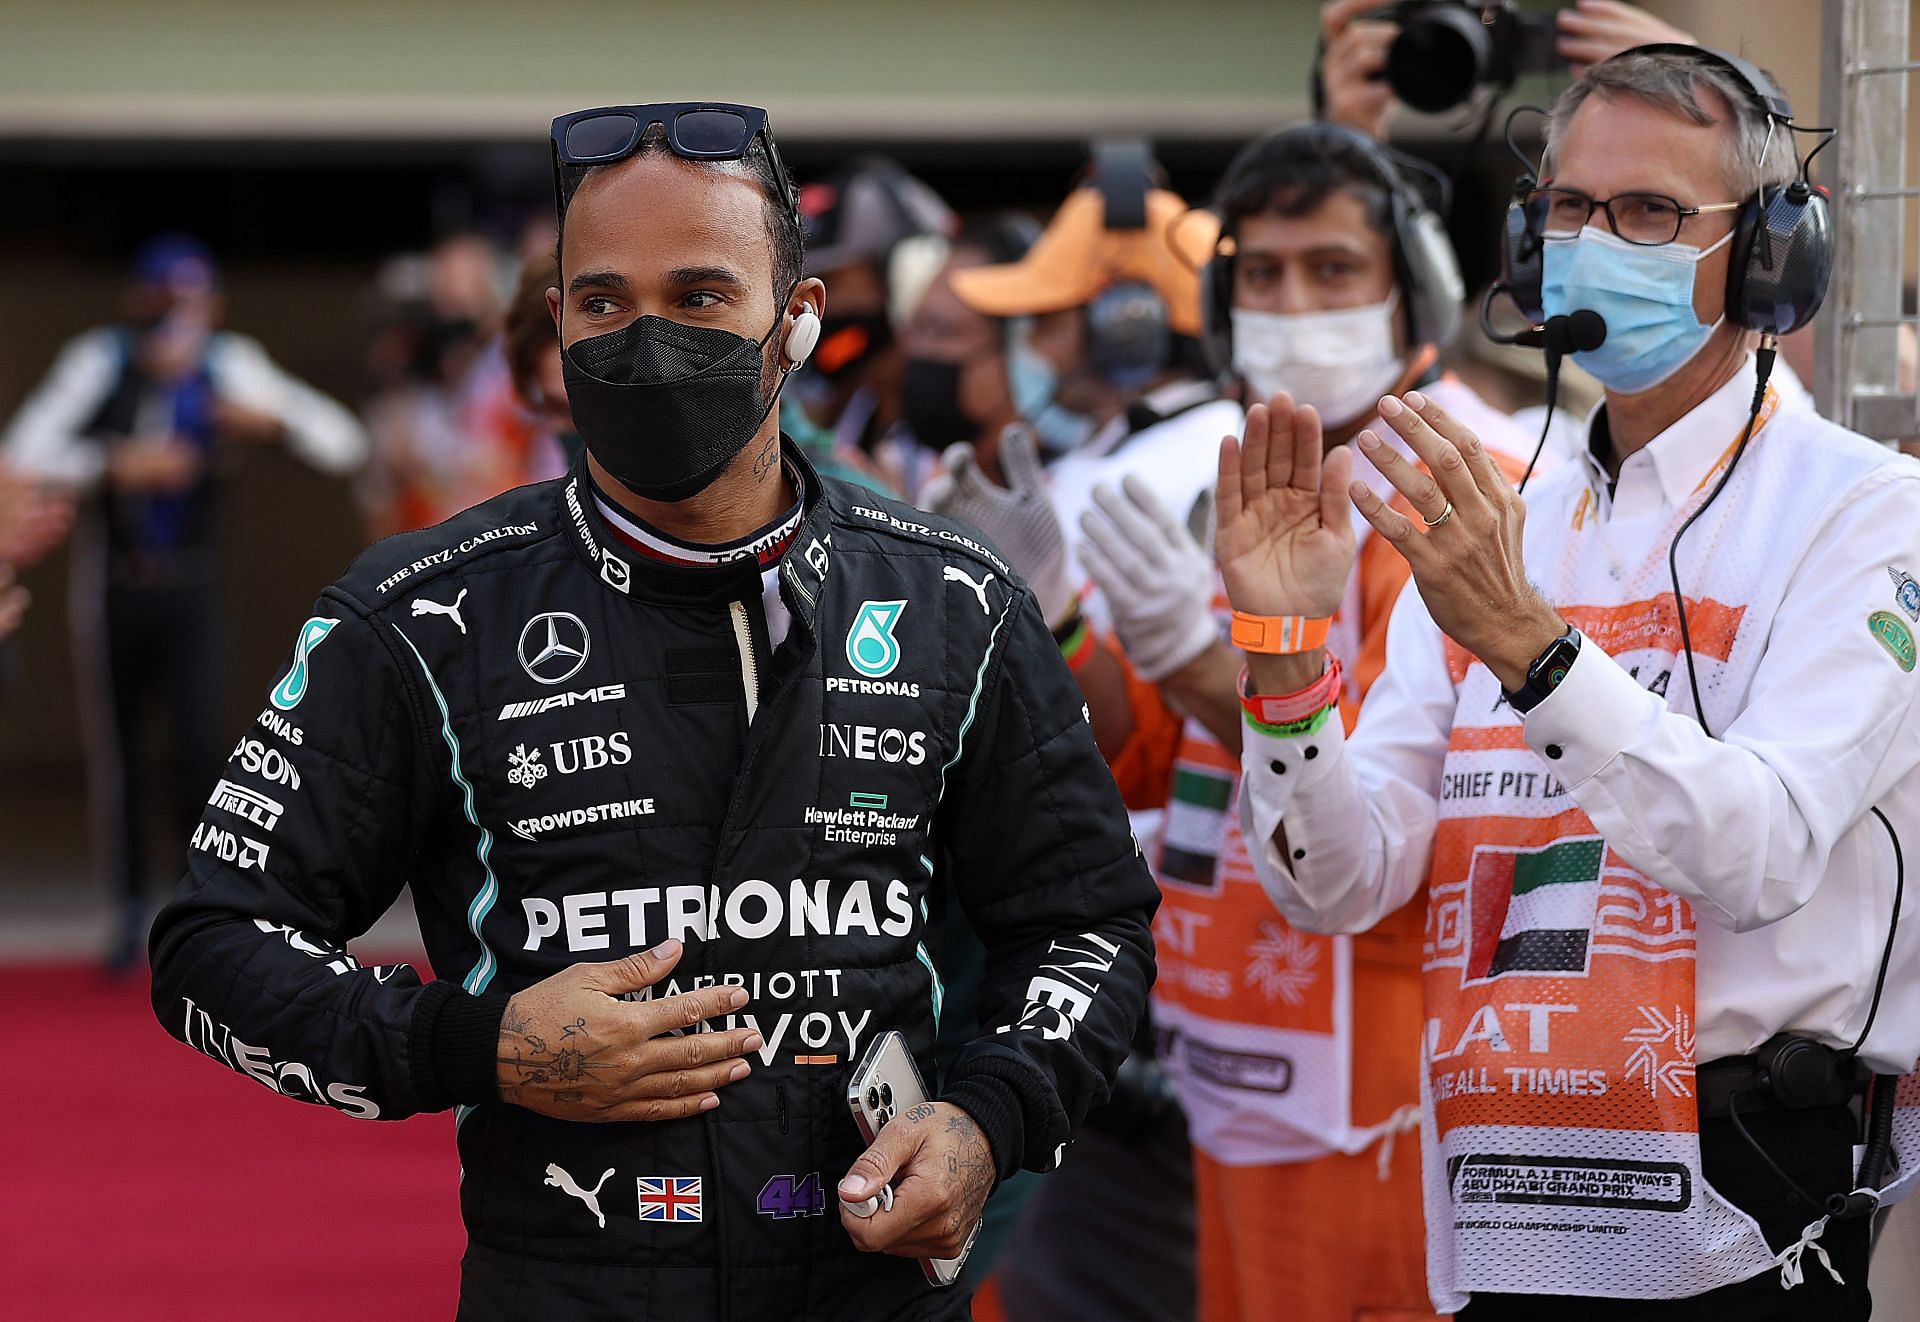 F1 Grand Prix of Abu Dhabi - Lewis Hamilton arrives at Yas Marina circuit